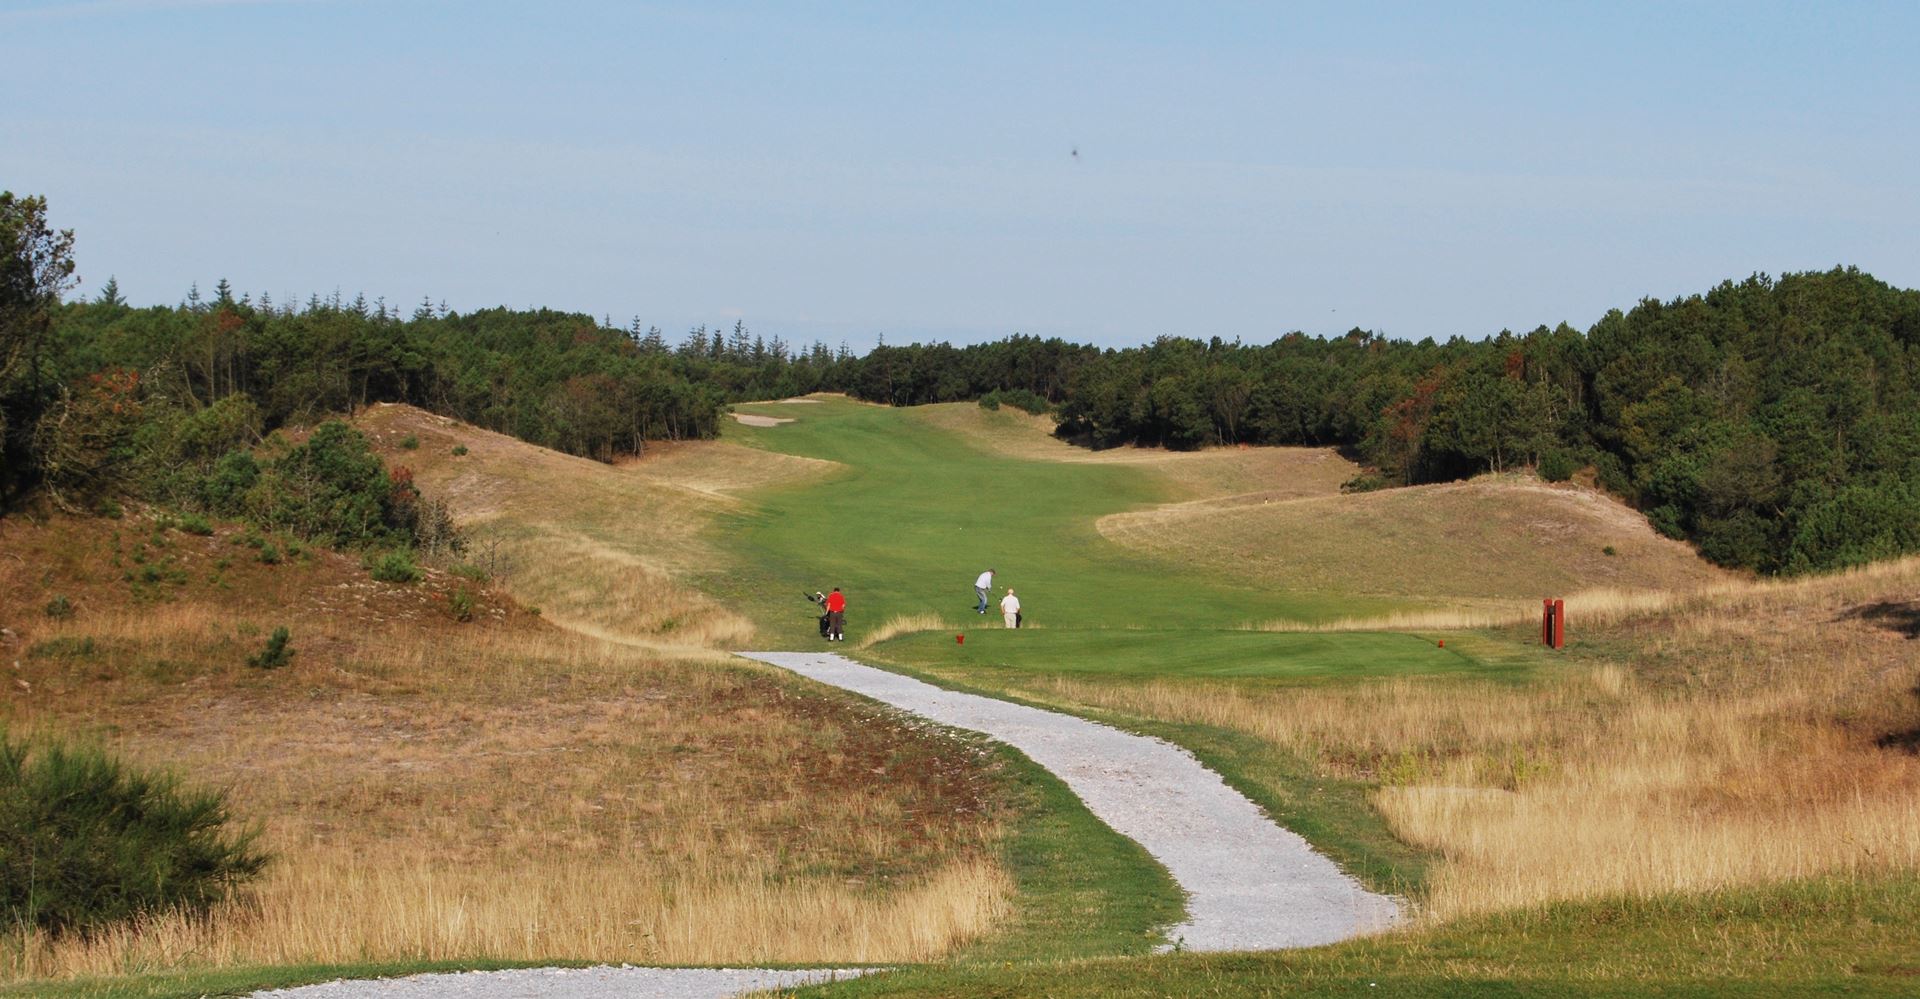 Sælger Mammoth tendens Danske golfbaner - spil golf i Nordvestjysk Golfklub - GolfersGlobe